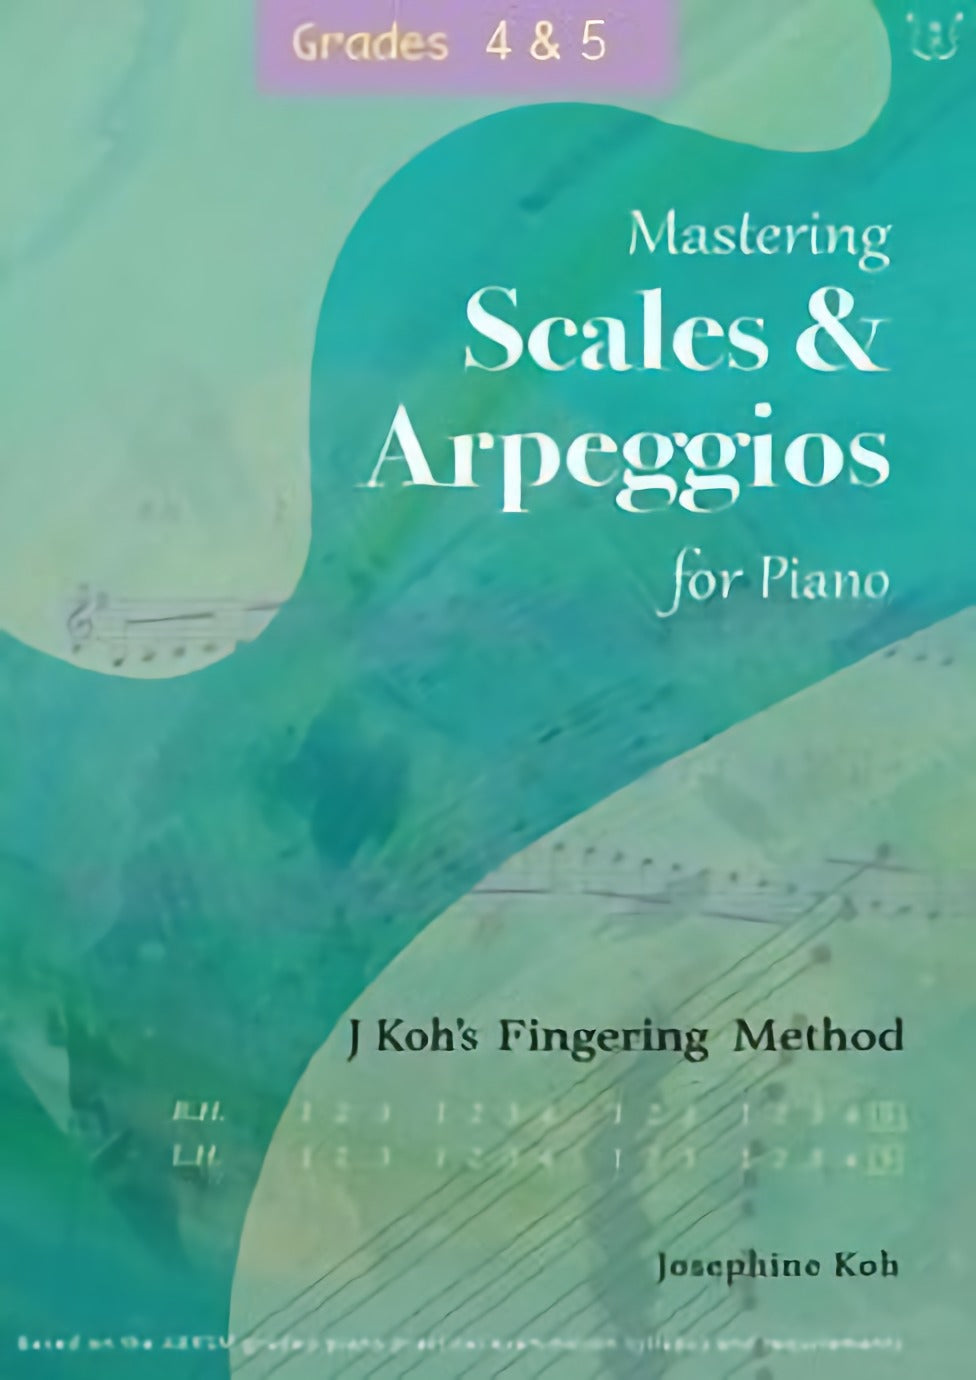 Mastering Scales and Arpeggios, J Koh's Fingering Method, Grades 4-5